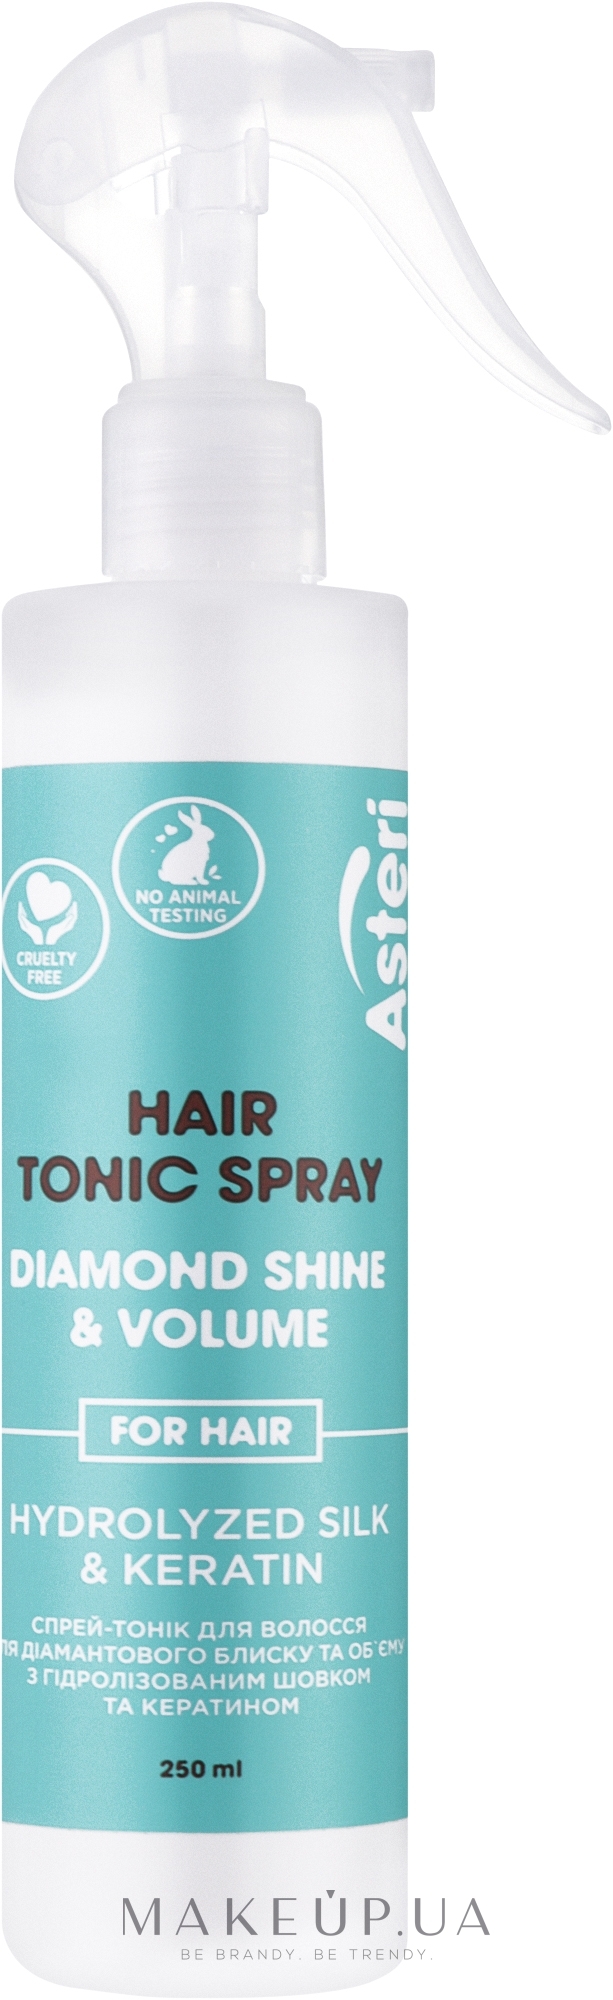 Спрей-тоник для волос "Бриллиантовый блеск и объем" - Asteri Hair Tonic Spray Diamond Shine & Volume — фото 250ml